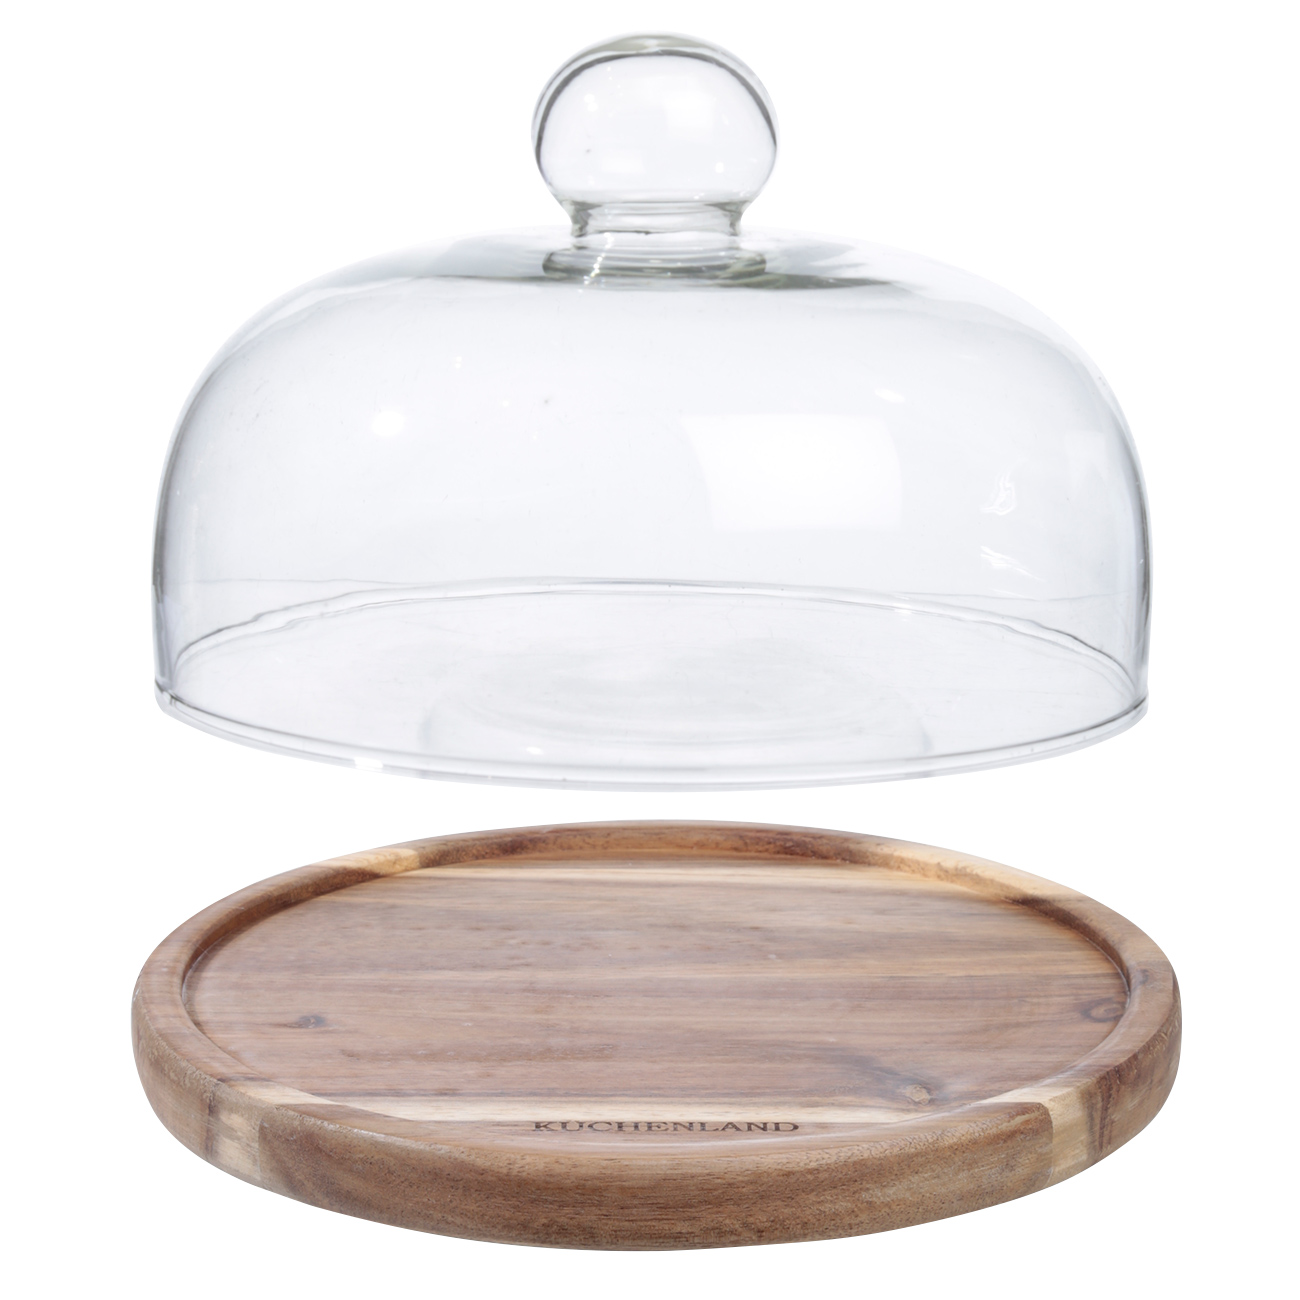 Dish with lid, 23x15 cm, wood/glass, round изображение № 2